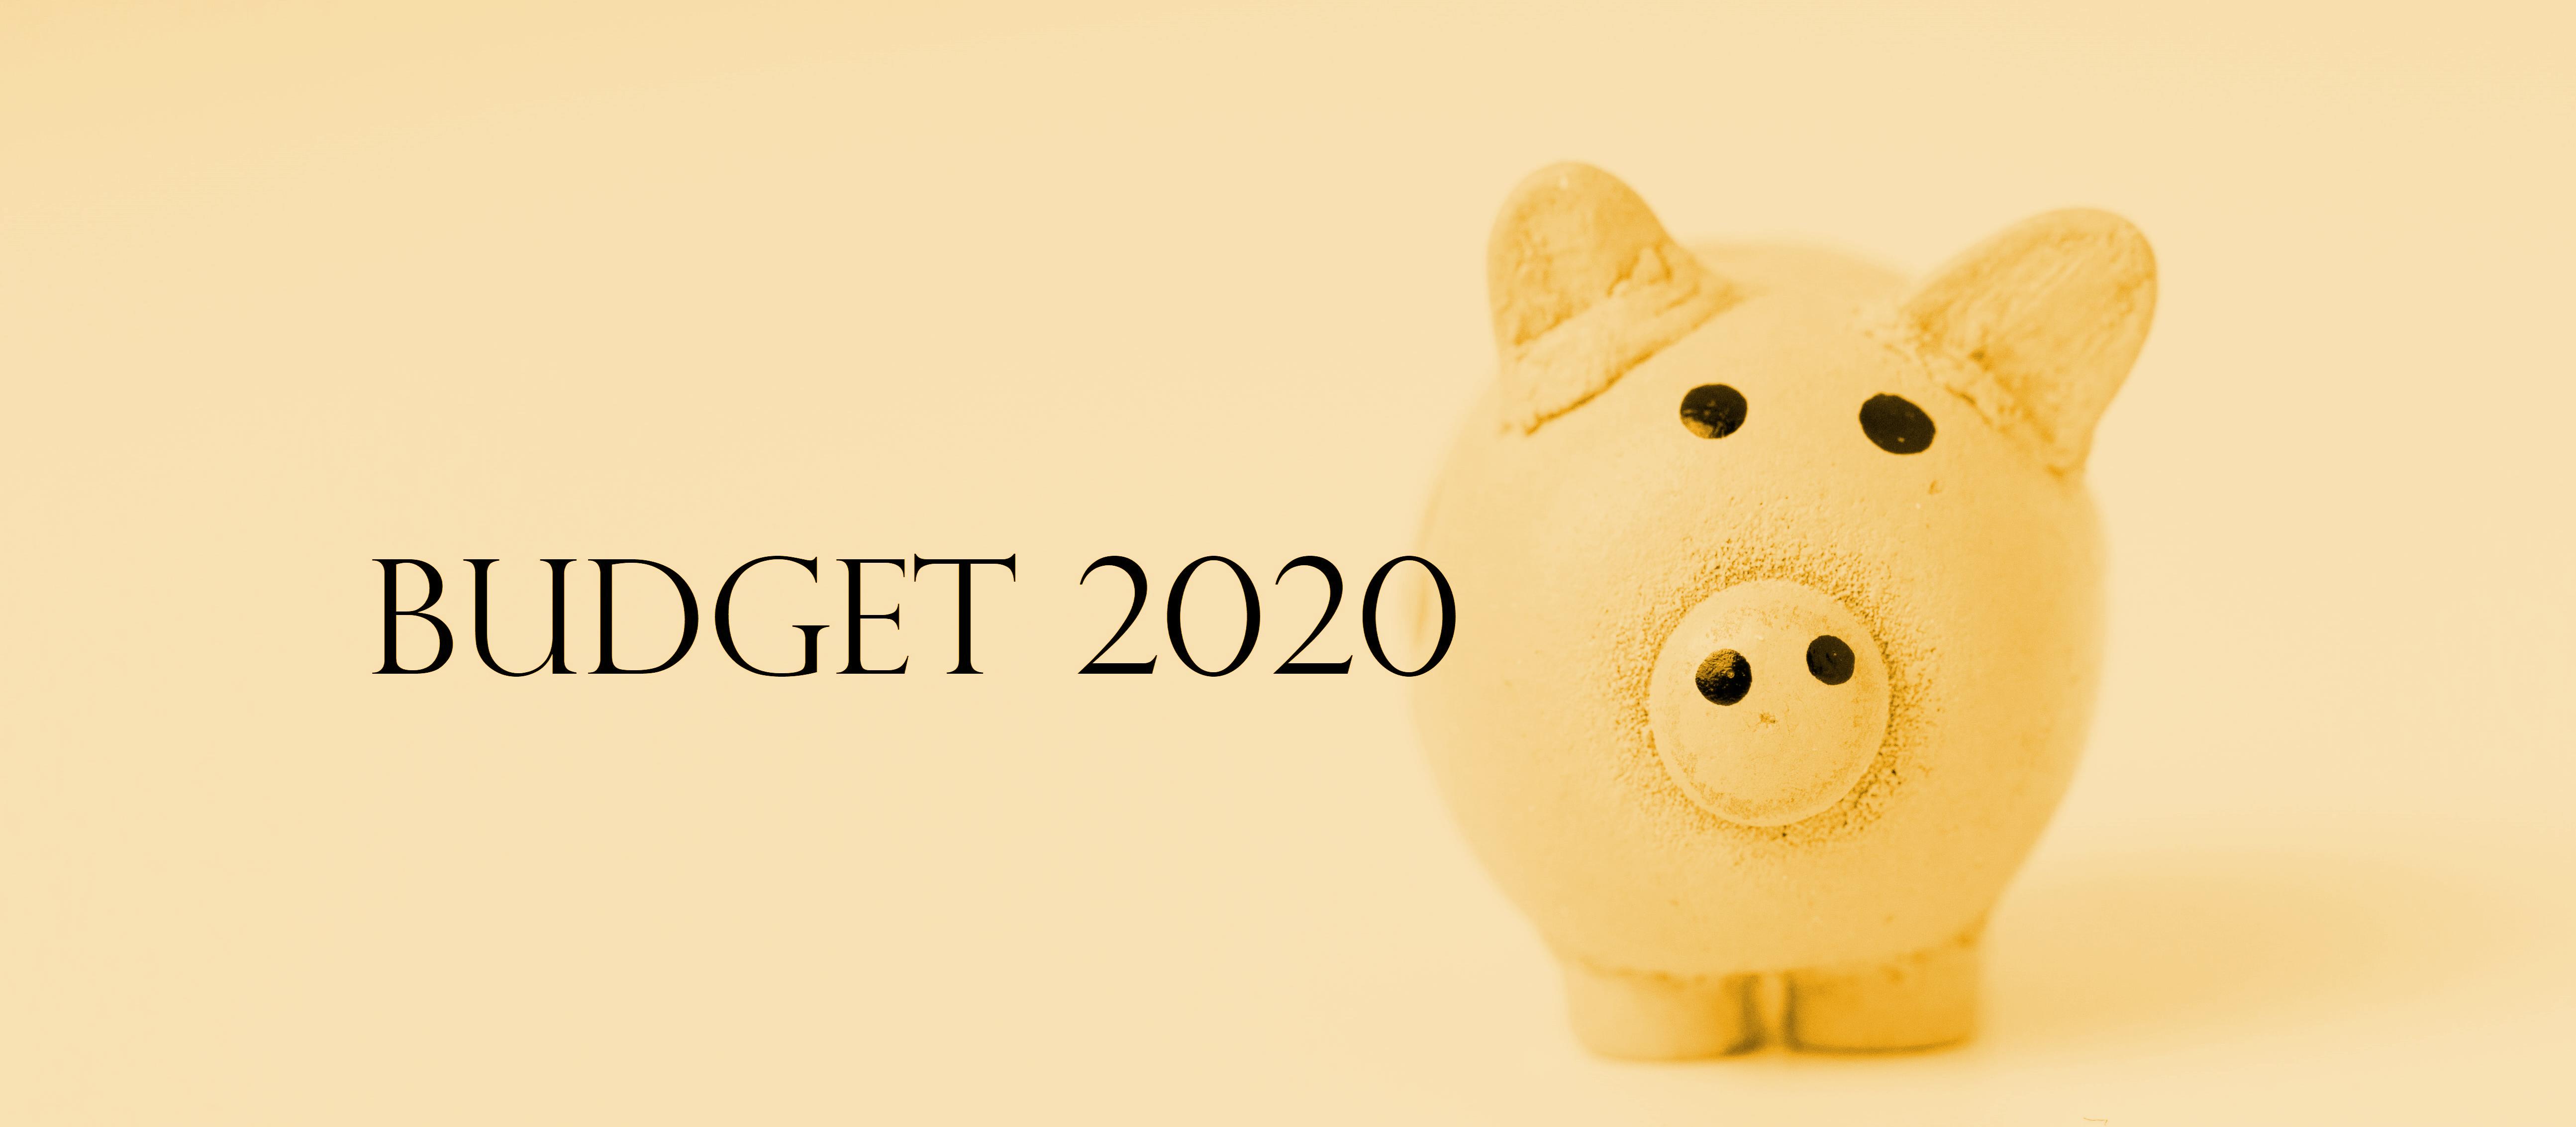 Budget 2020 Piggy_yellow